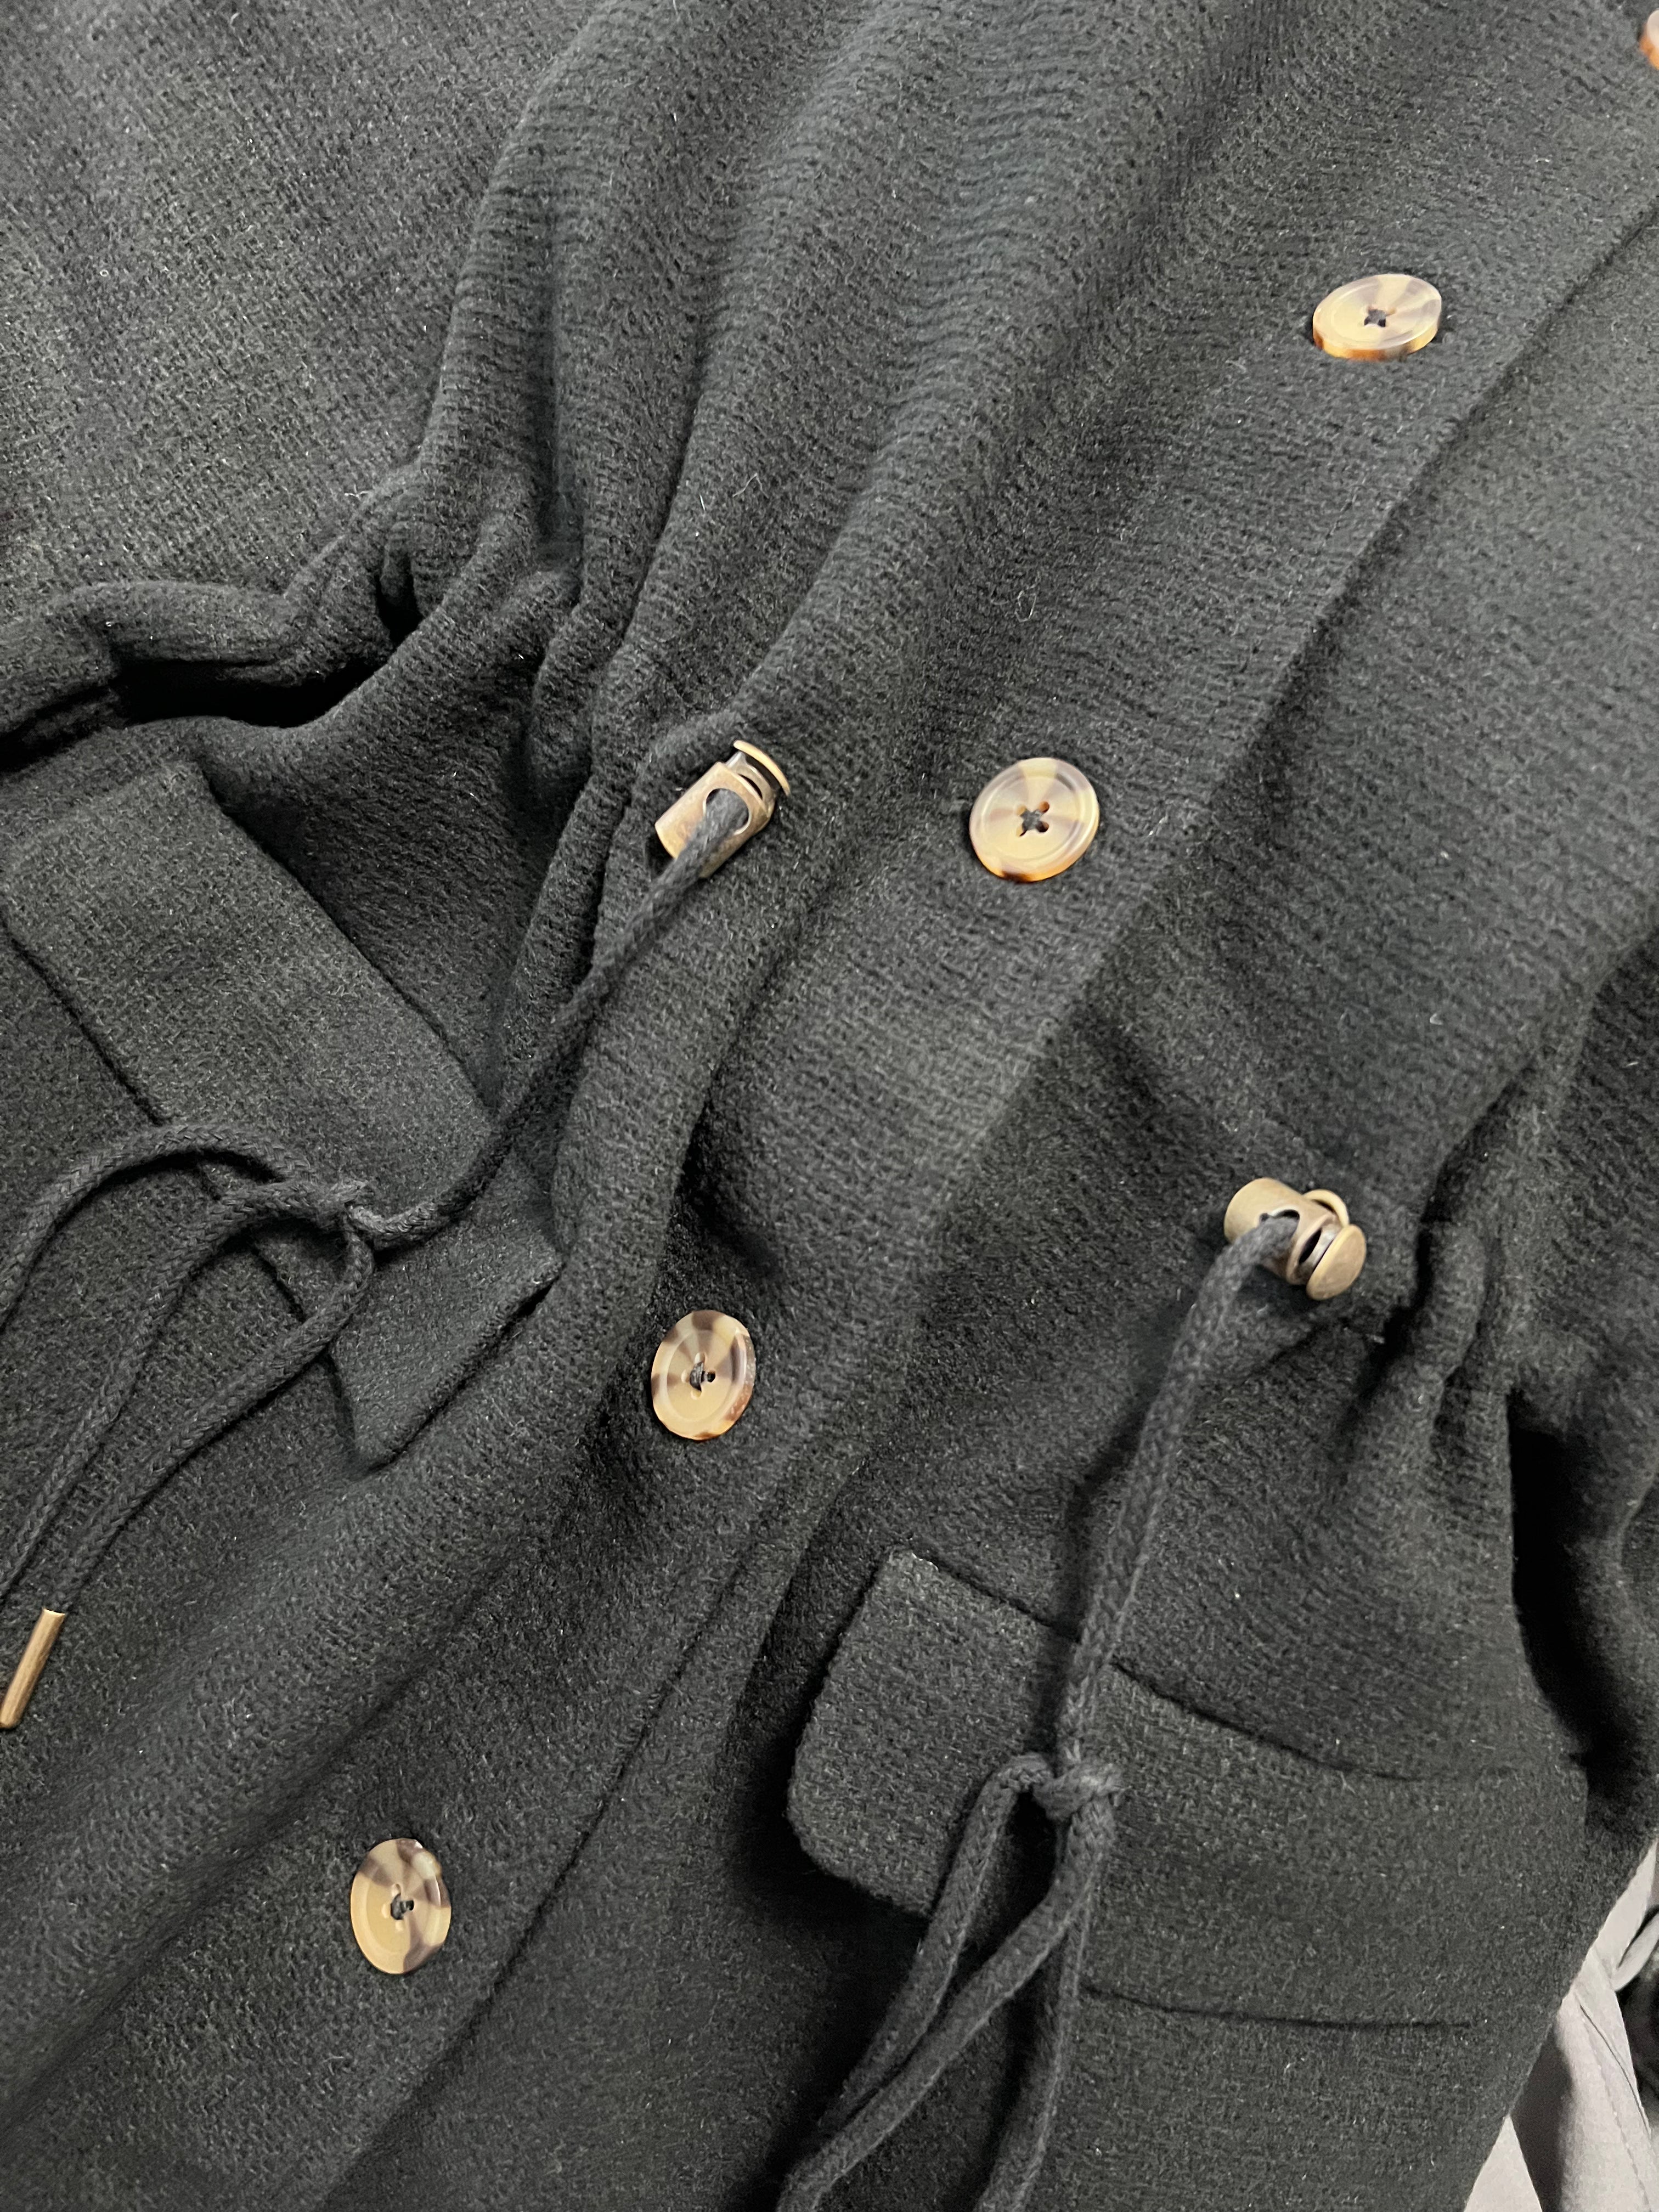 RD Style Hooded Drawstring Jacket- Black